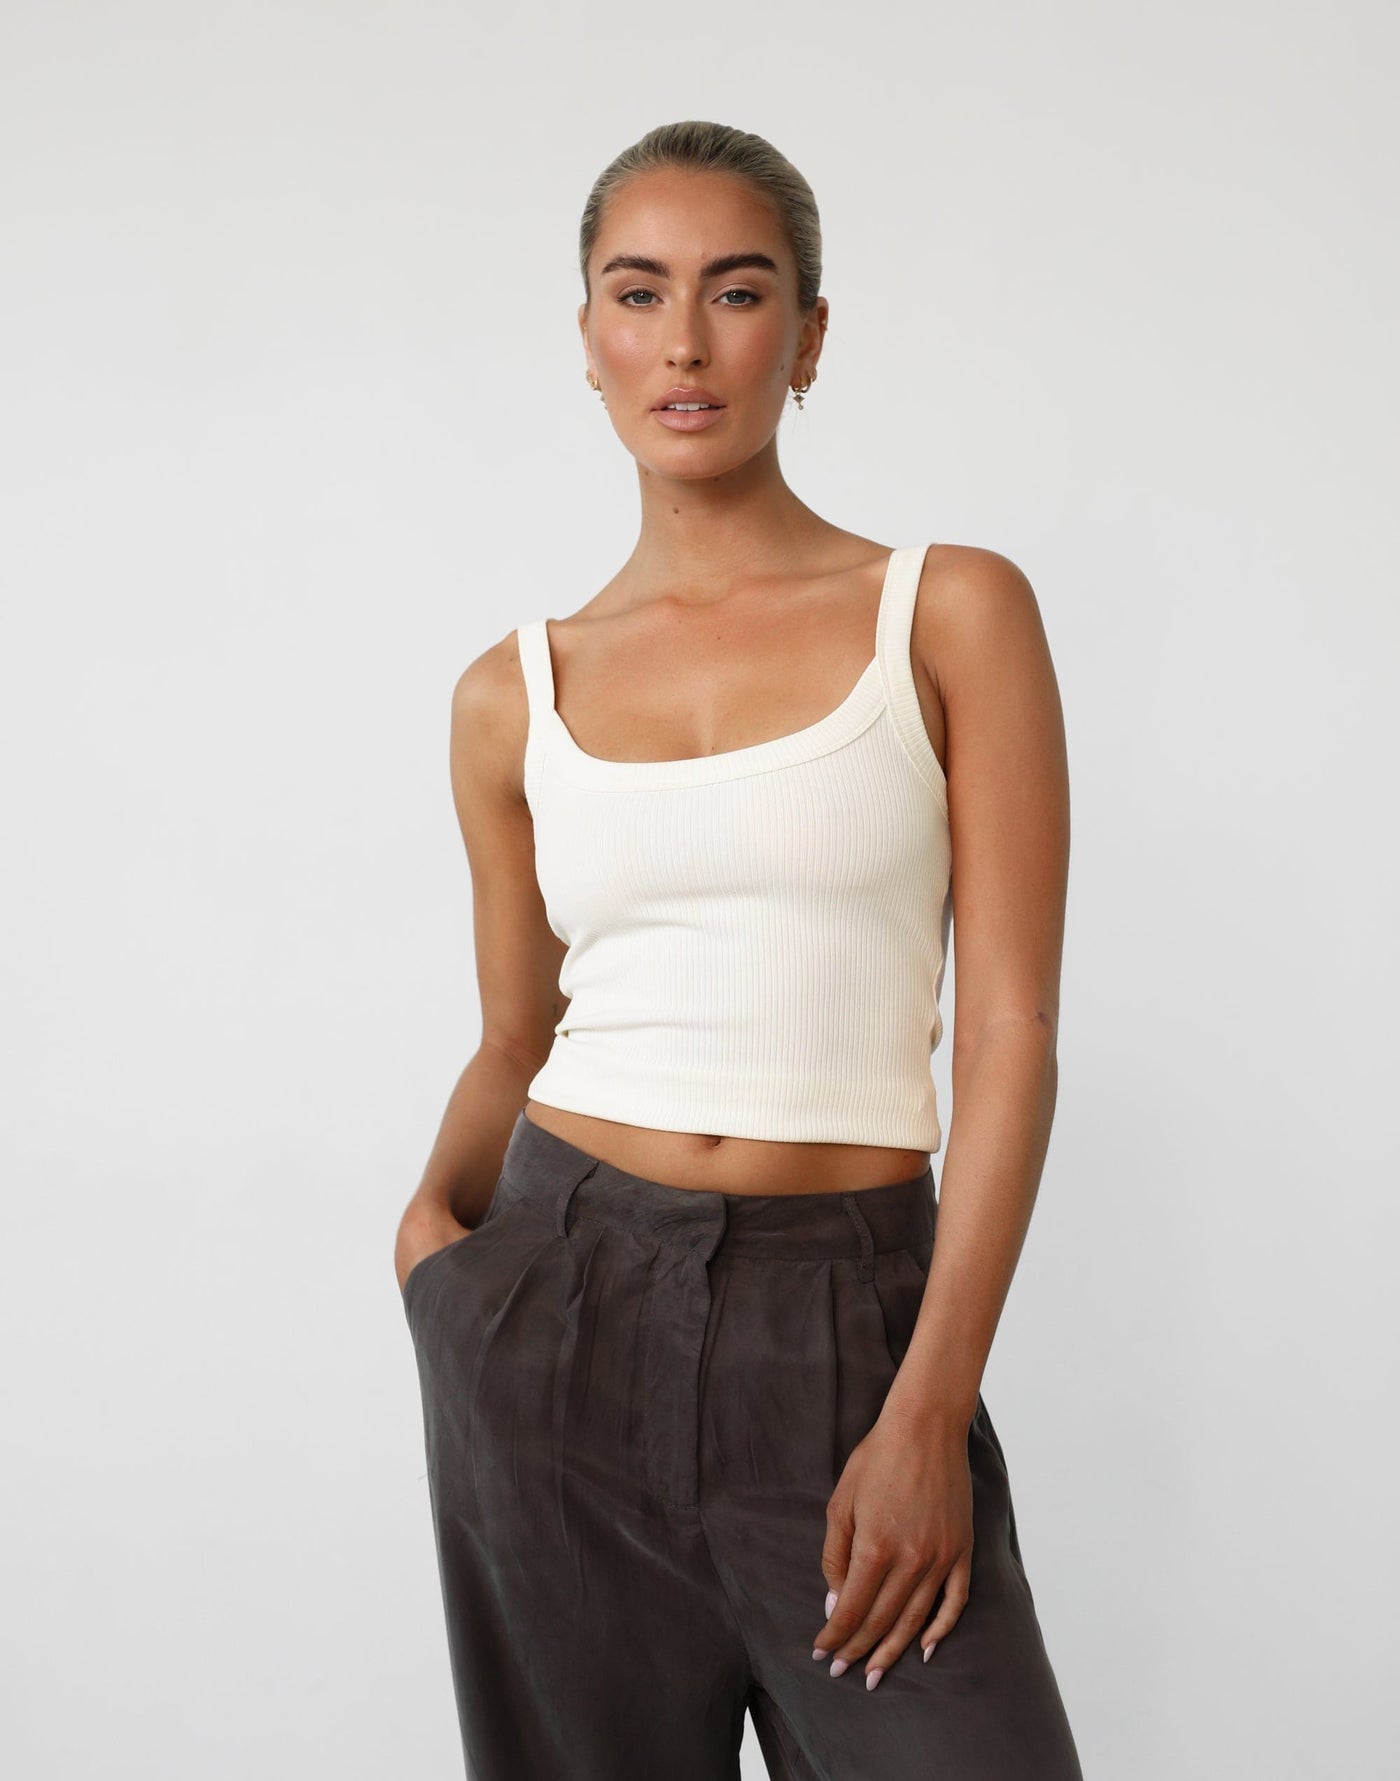 Skyler Tank Top (Off White) - Sleeveless Scoop Neck Tank Top - Women's Top - Charcoal Clothing